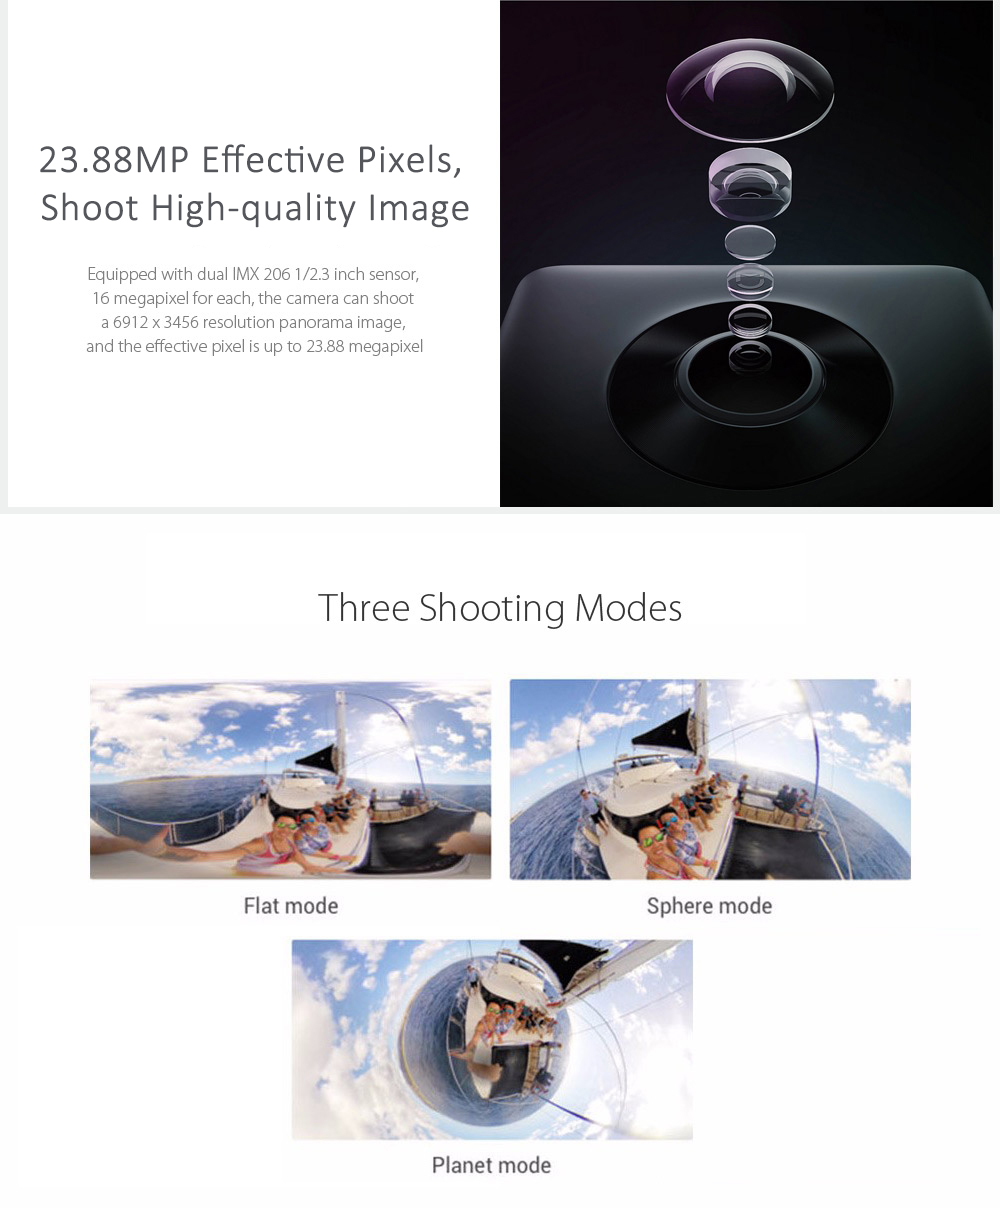 Xiaomi mijia 3.5K 360 Degree Panorama Action Camera Ambarella A12 Chipset